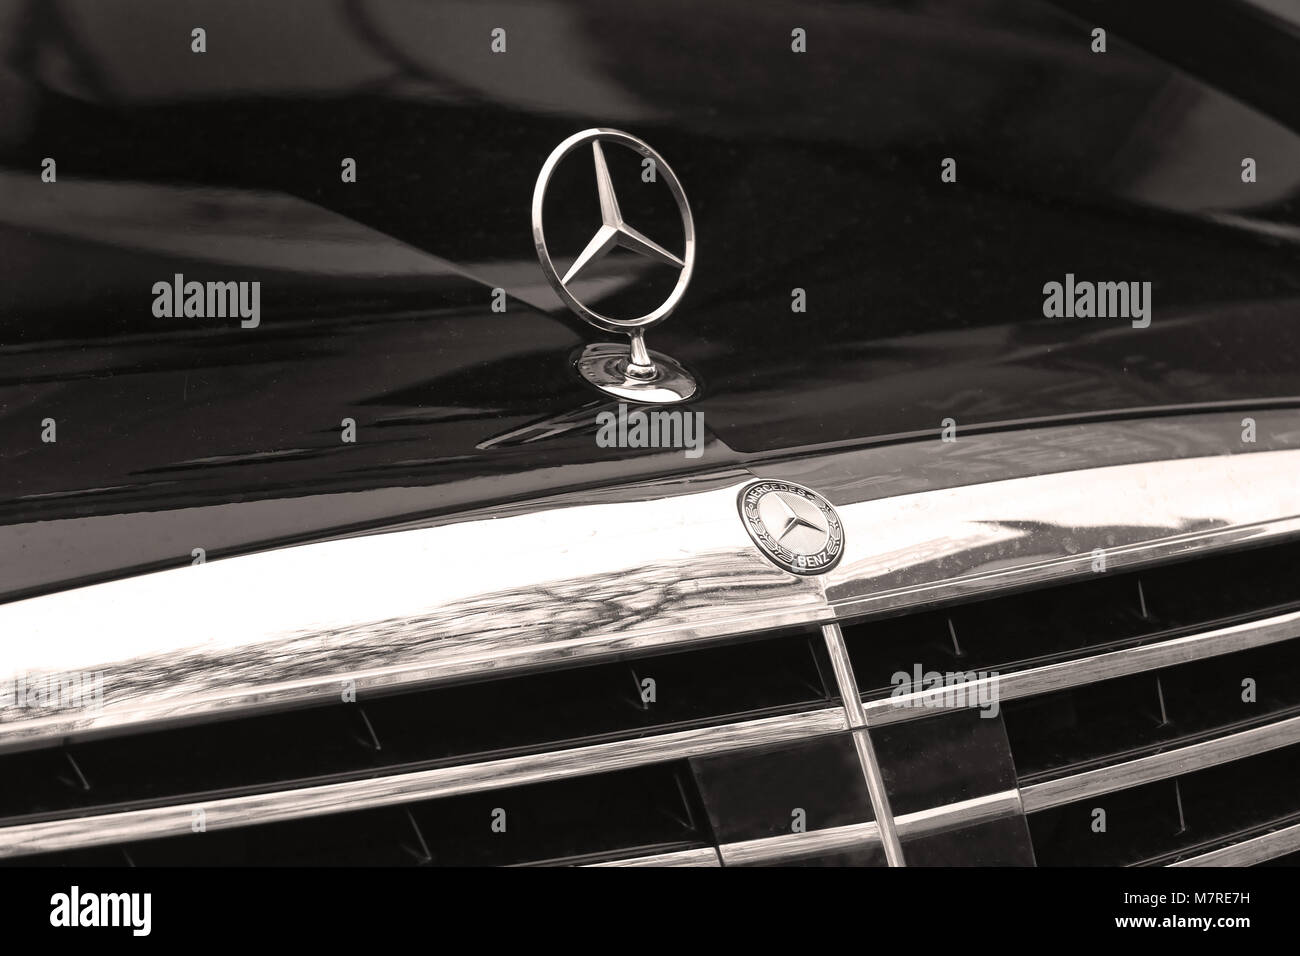 Mercedes benz car bonnet hi-res stock photography and images - Alamy